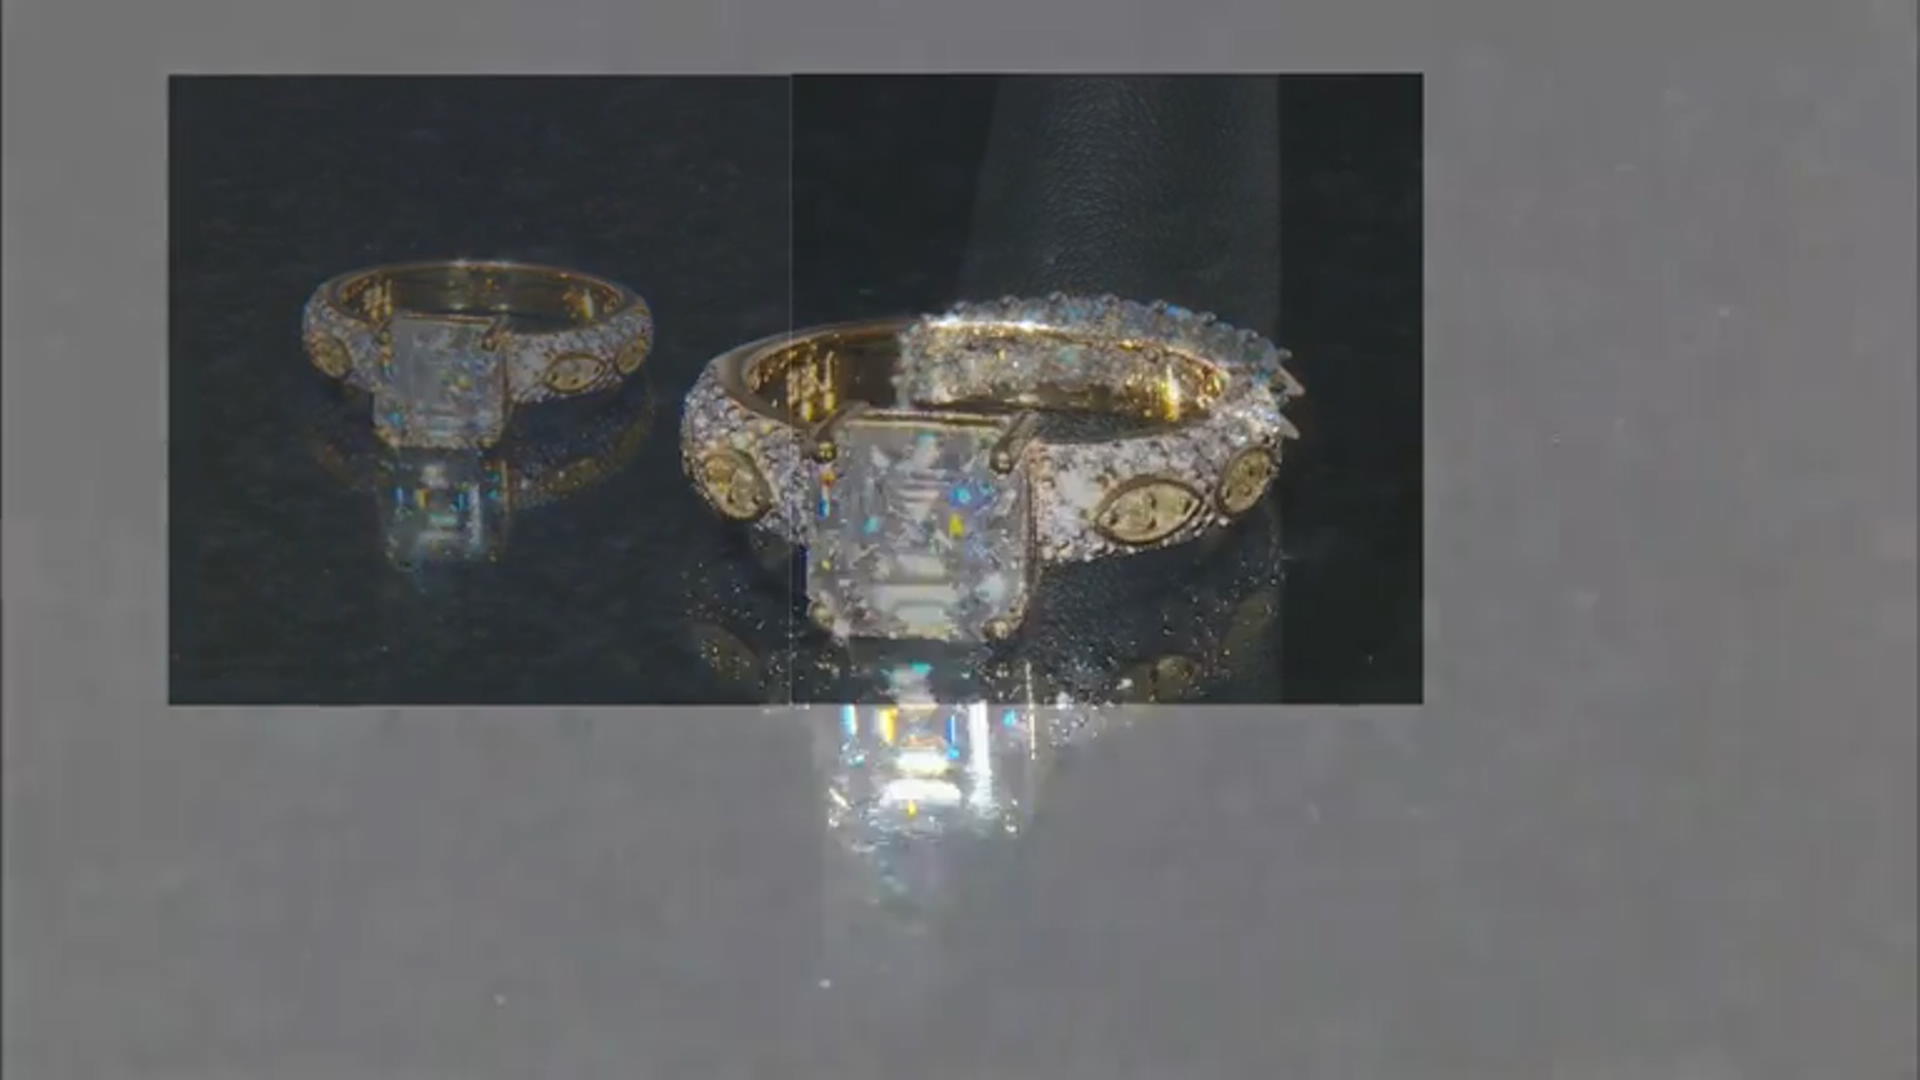 Moissanite And Yellow Diamond 14k Yellow Gold Silver Ring 3.46ctw DEW. Video Thumbnail